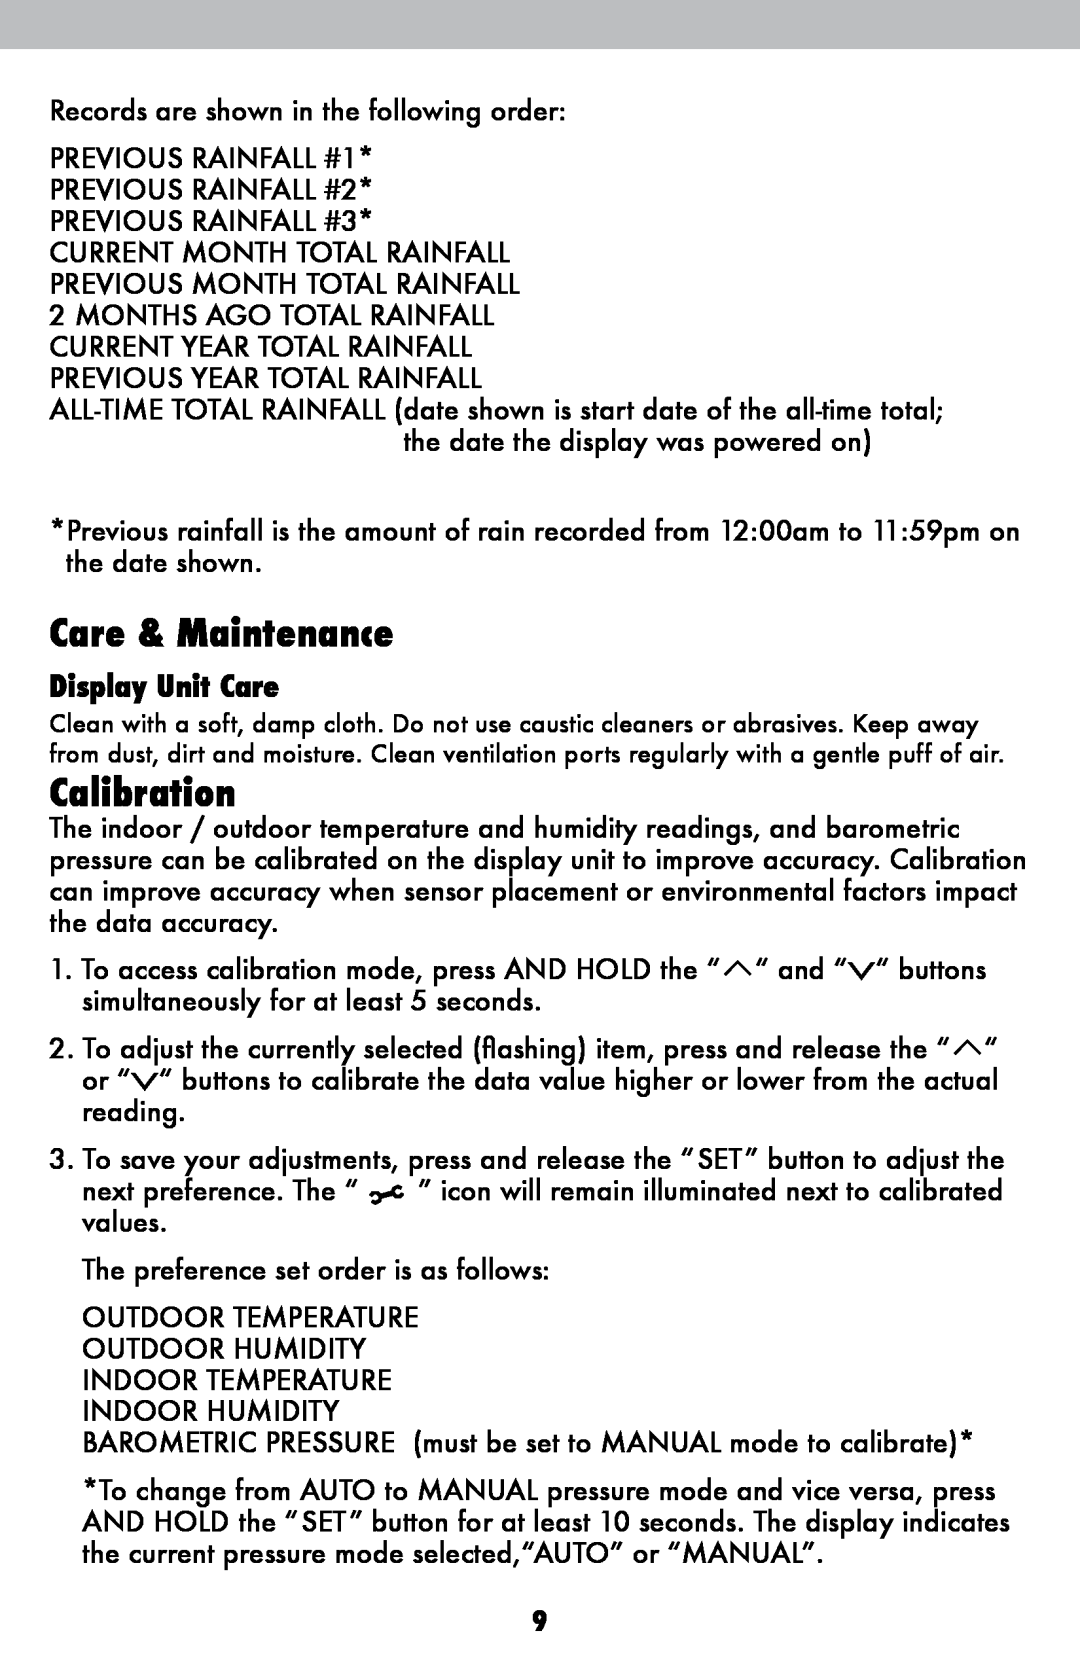 Acu-Rite 06025RM instruction manual Care & Maintenance, Calibration, Display Unit Care 